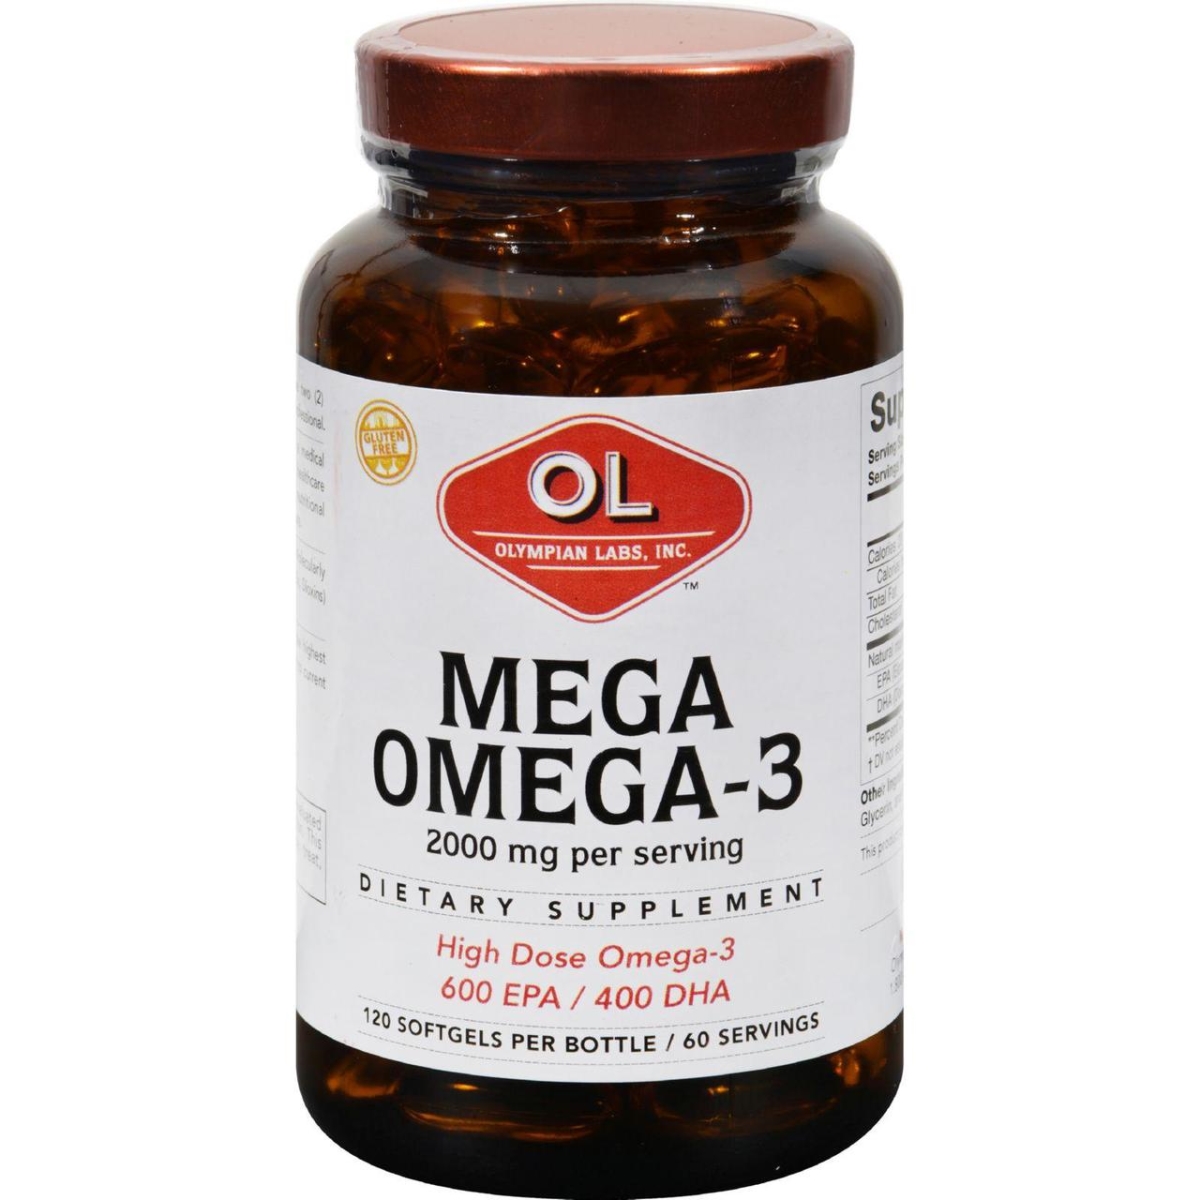 Hg0382747 2000 Mg Mega Omega-3 Fish Oils - 120 Softgels